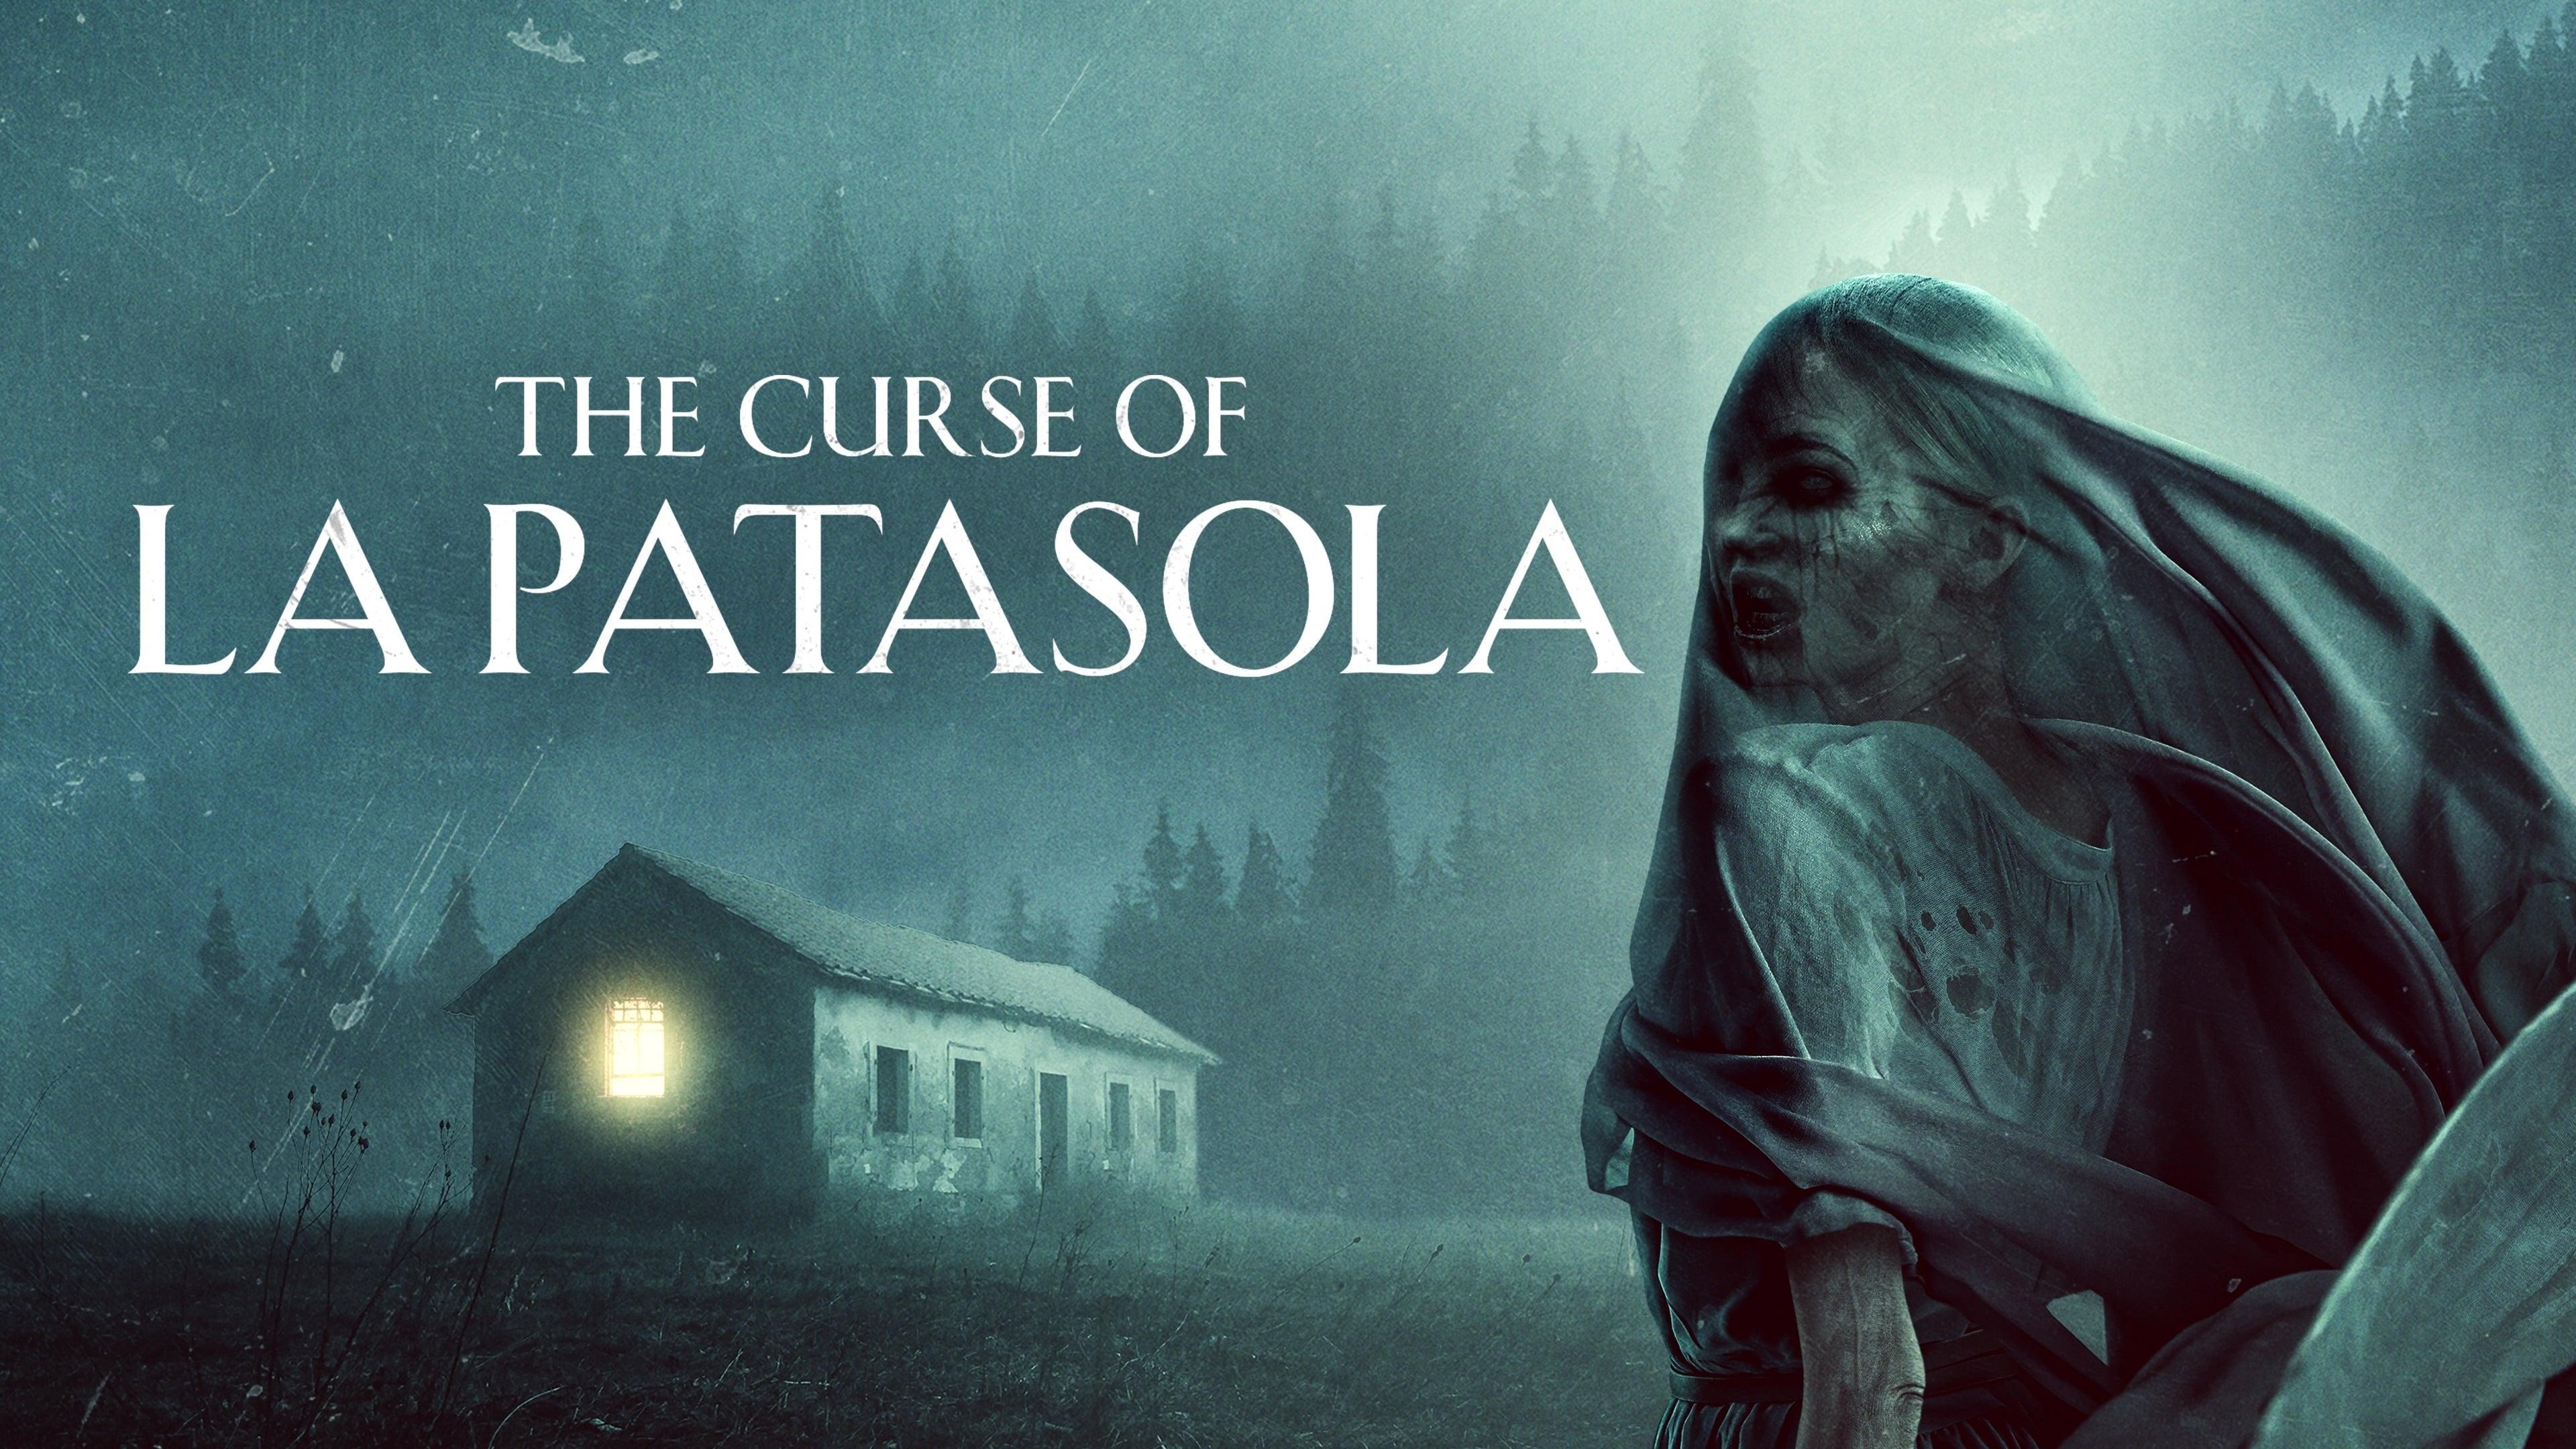 The Curse of La Patasola backdrop